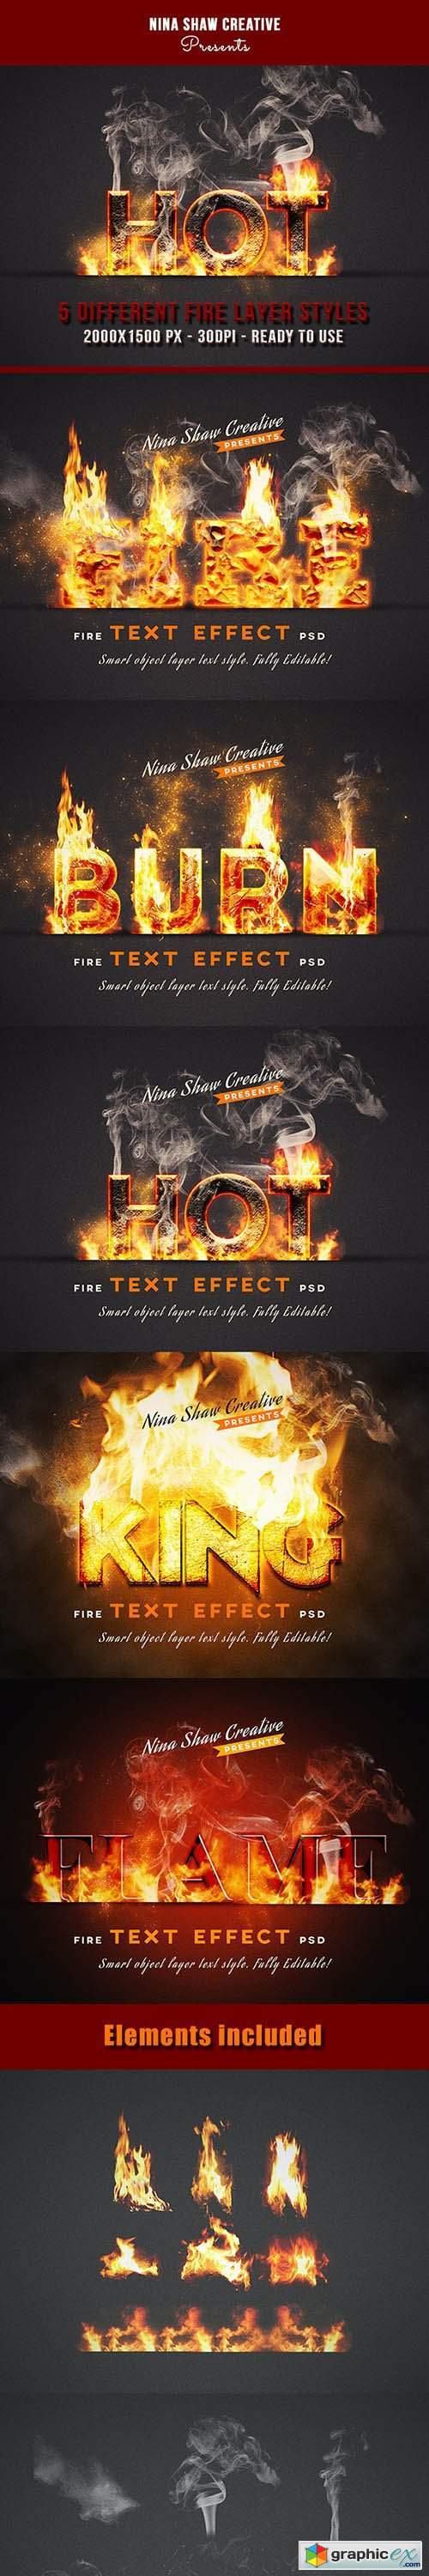 Fire Text Effects